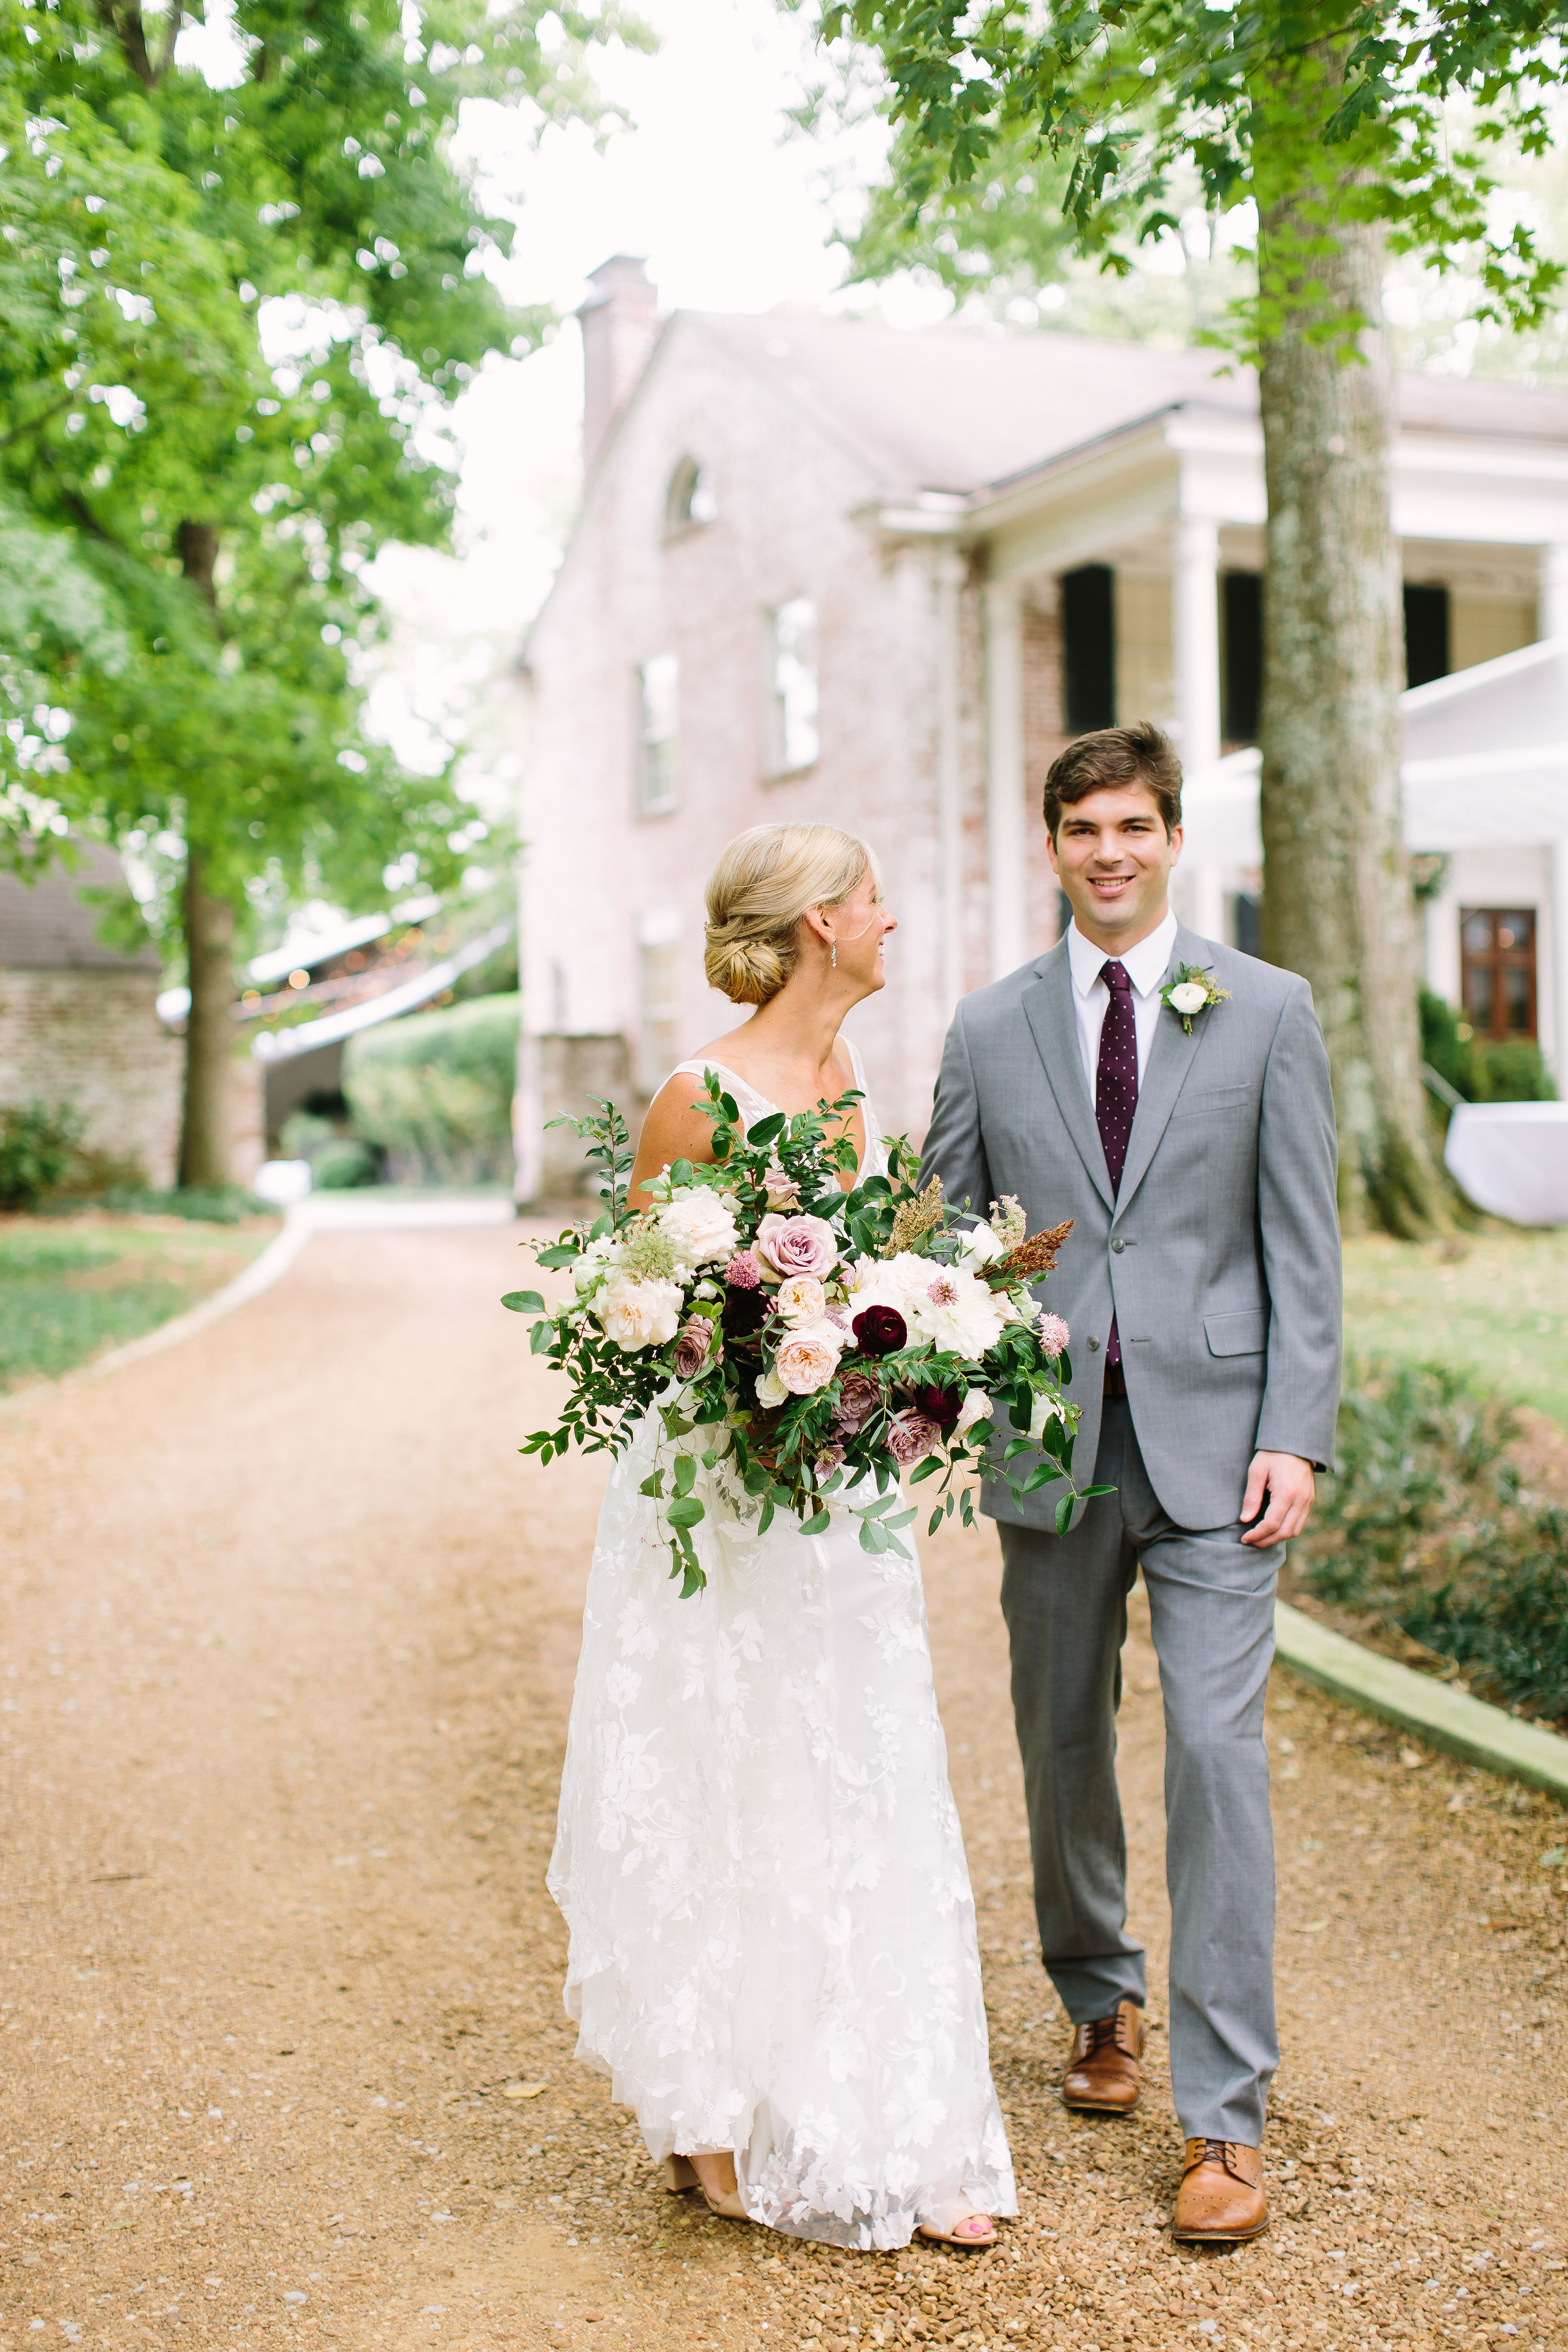 Natural, asymmetrical bridal bouquet with soft mauve garden roses, eggplant ranunculus, and trailing greenery // Nashville Wedding Floral Design